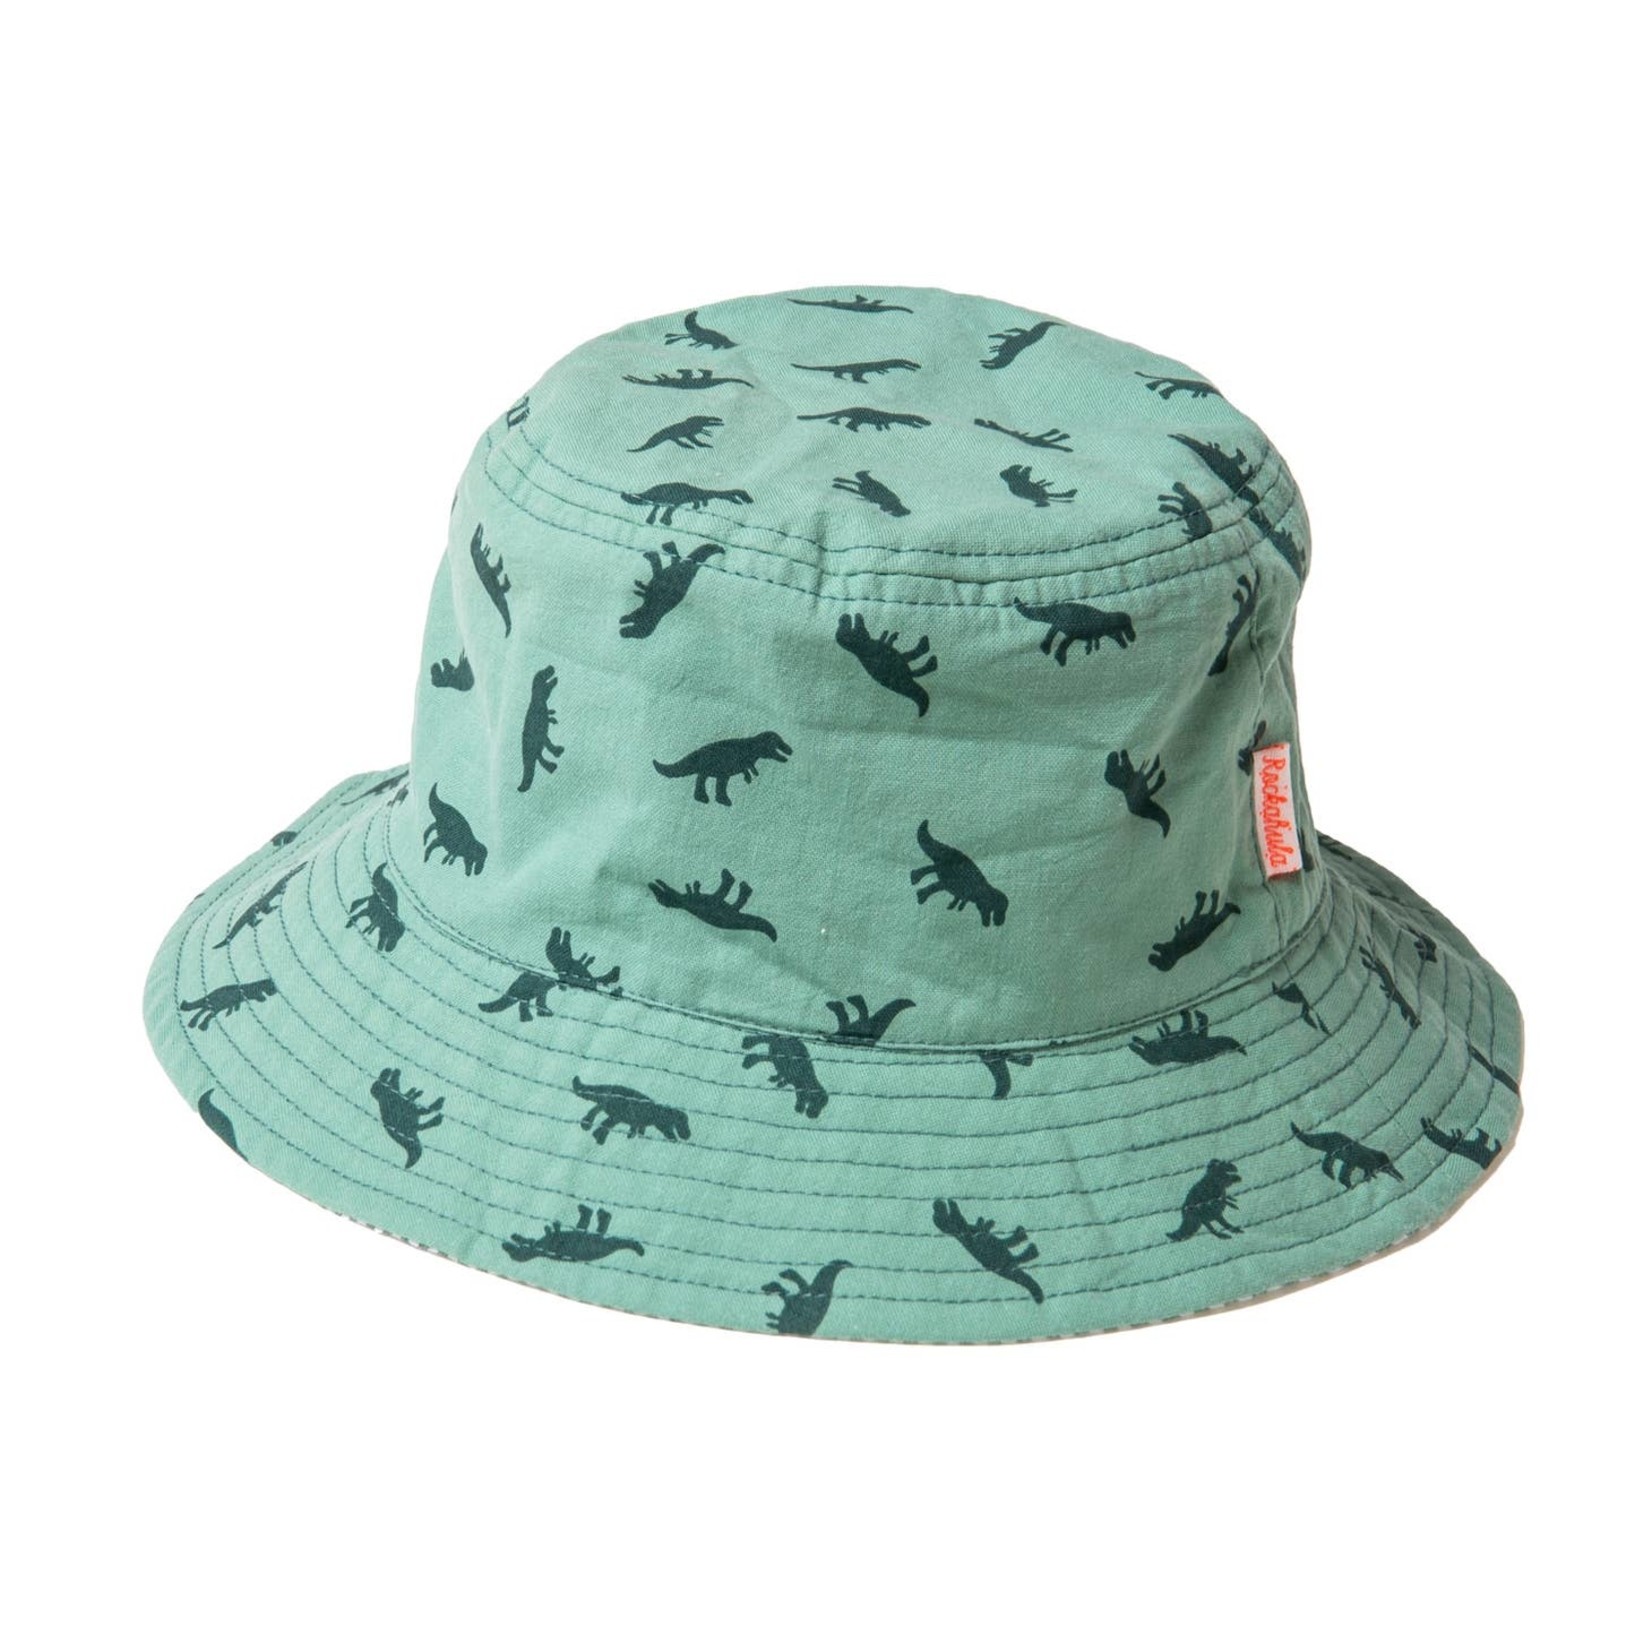 rockahula kids reversible dinosaur bucket hat